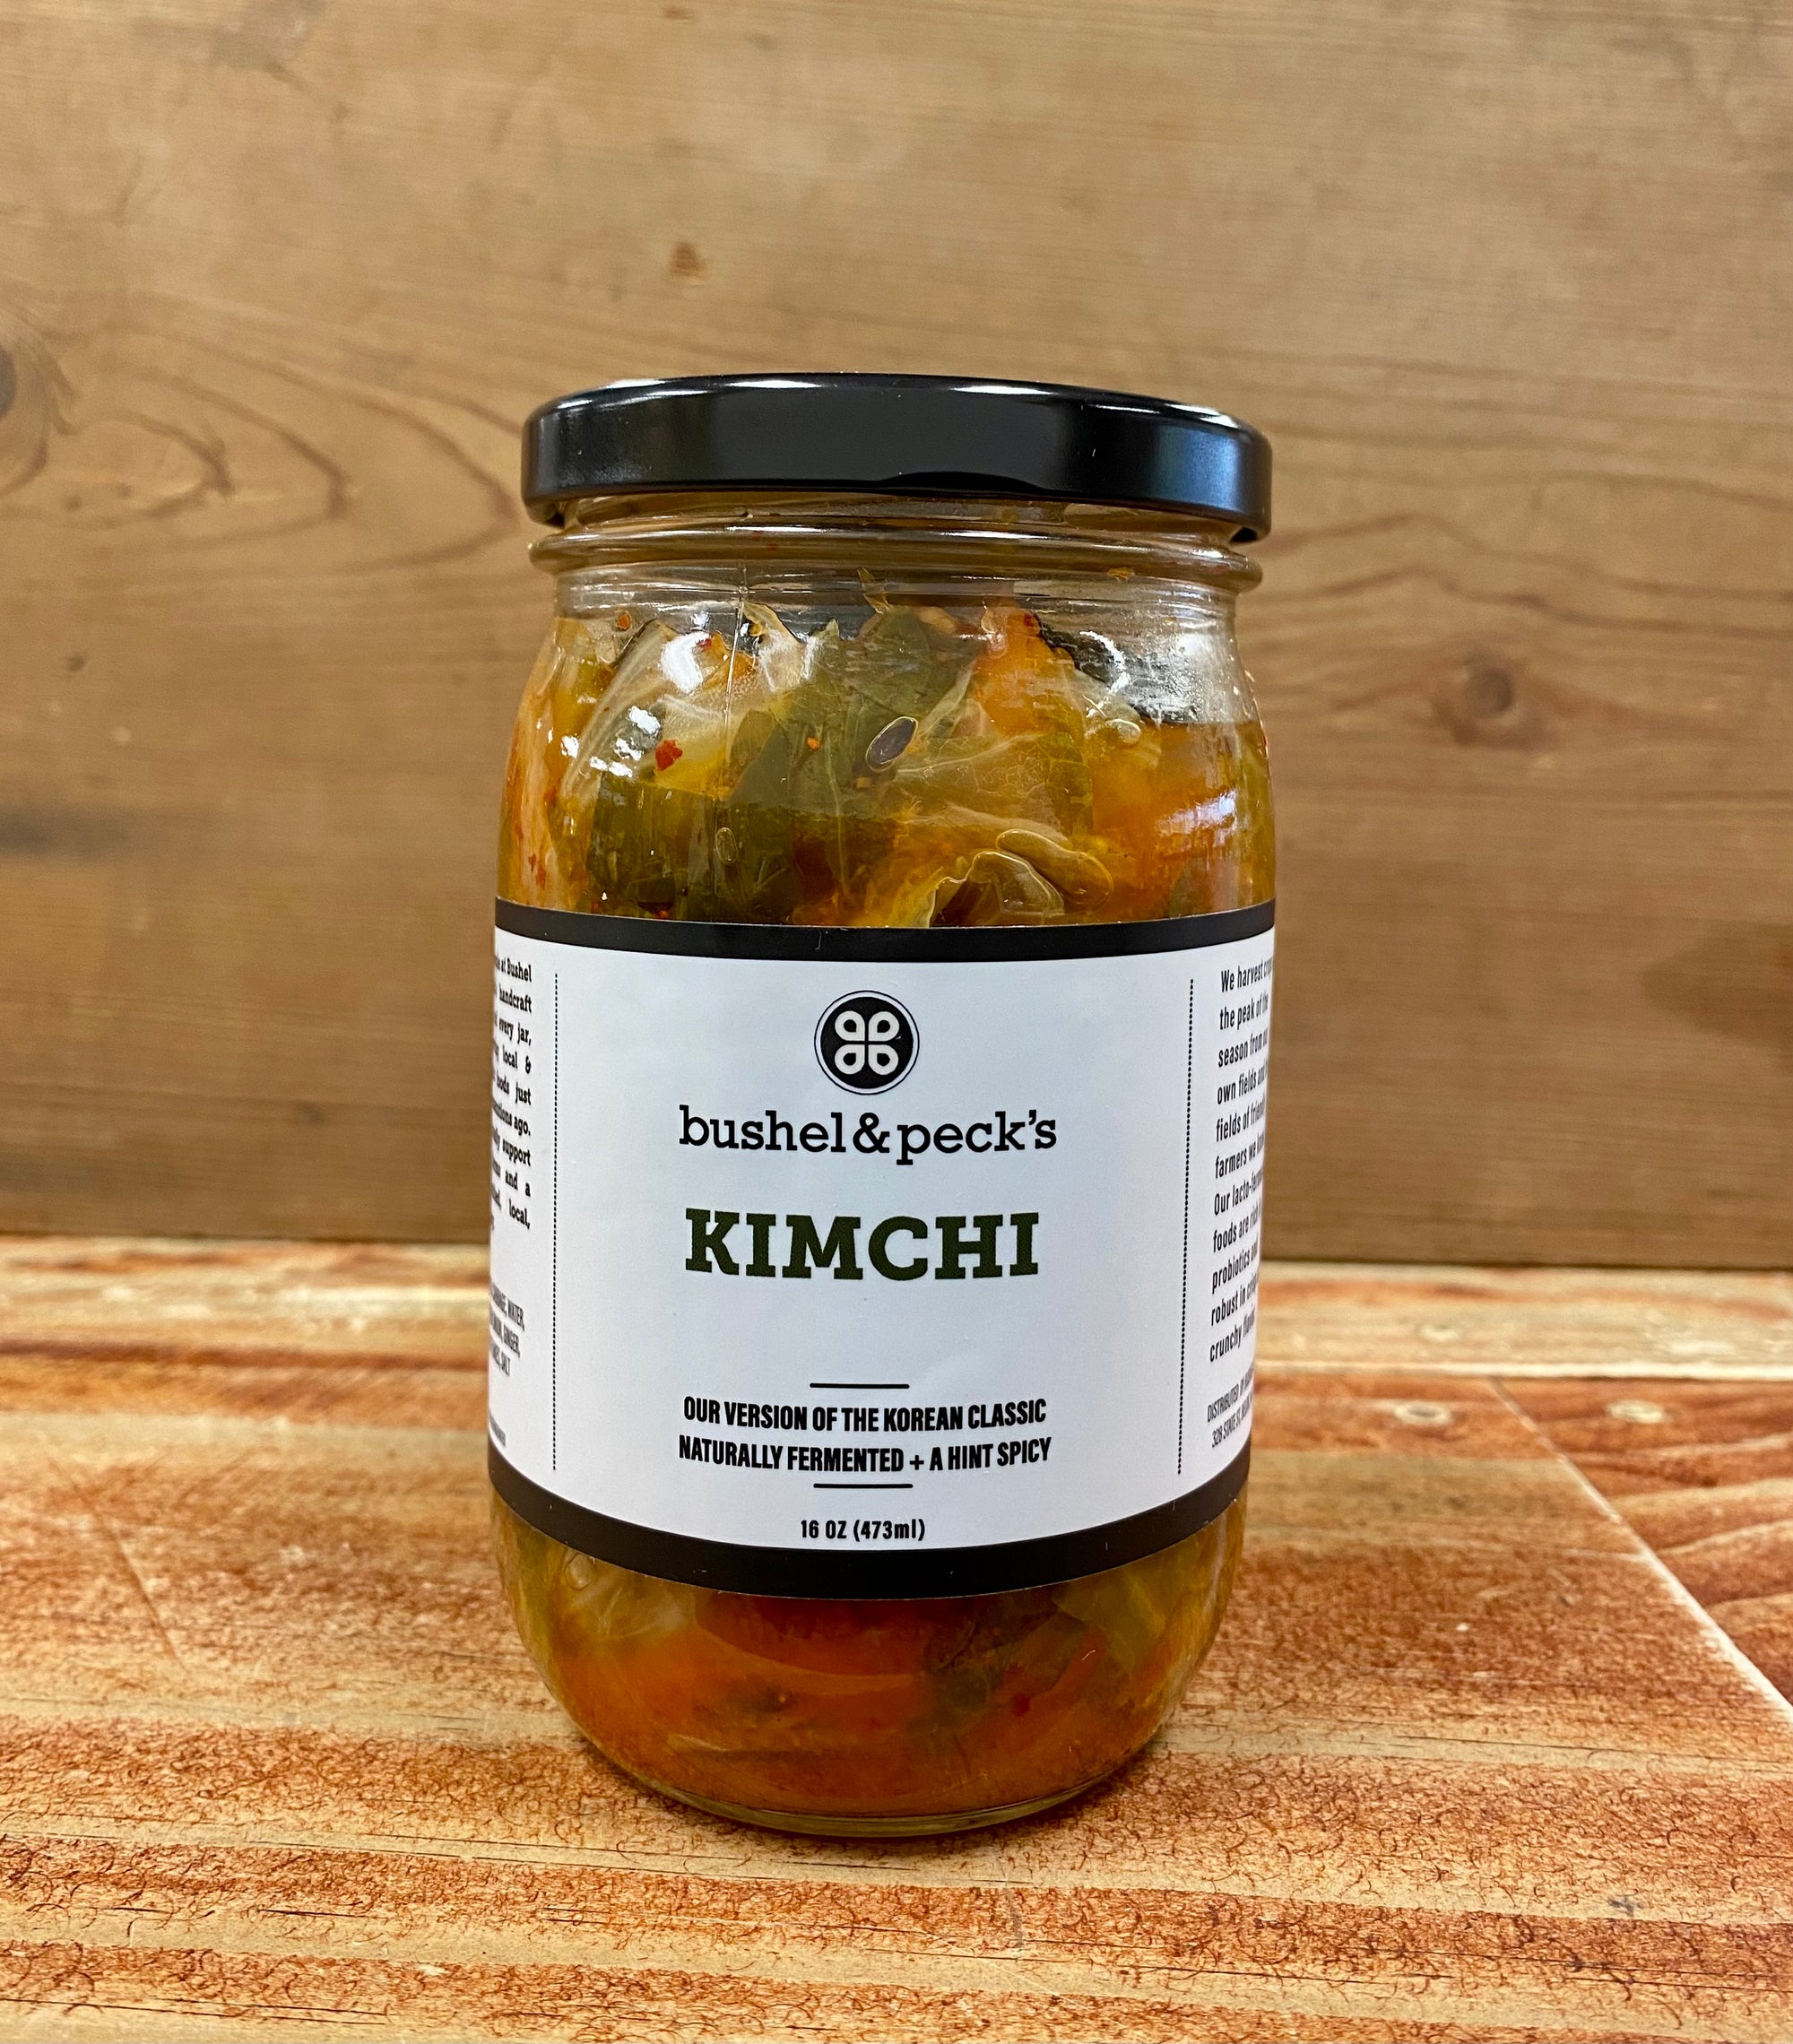 Kimchi - Made by B&P